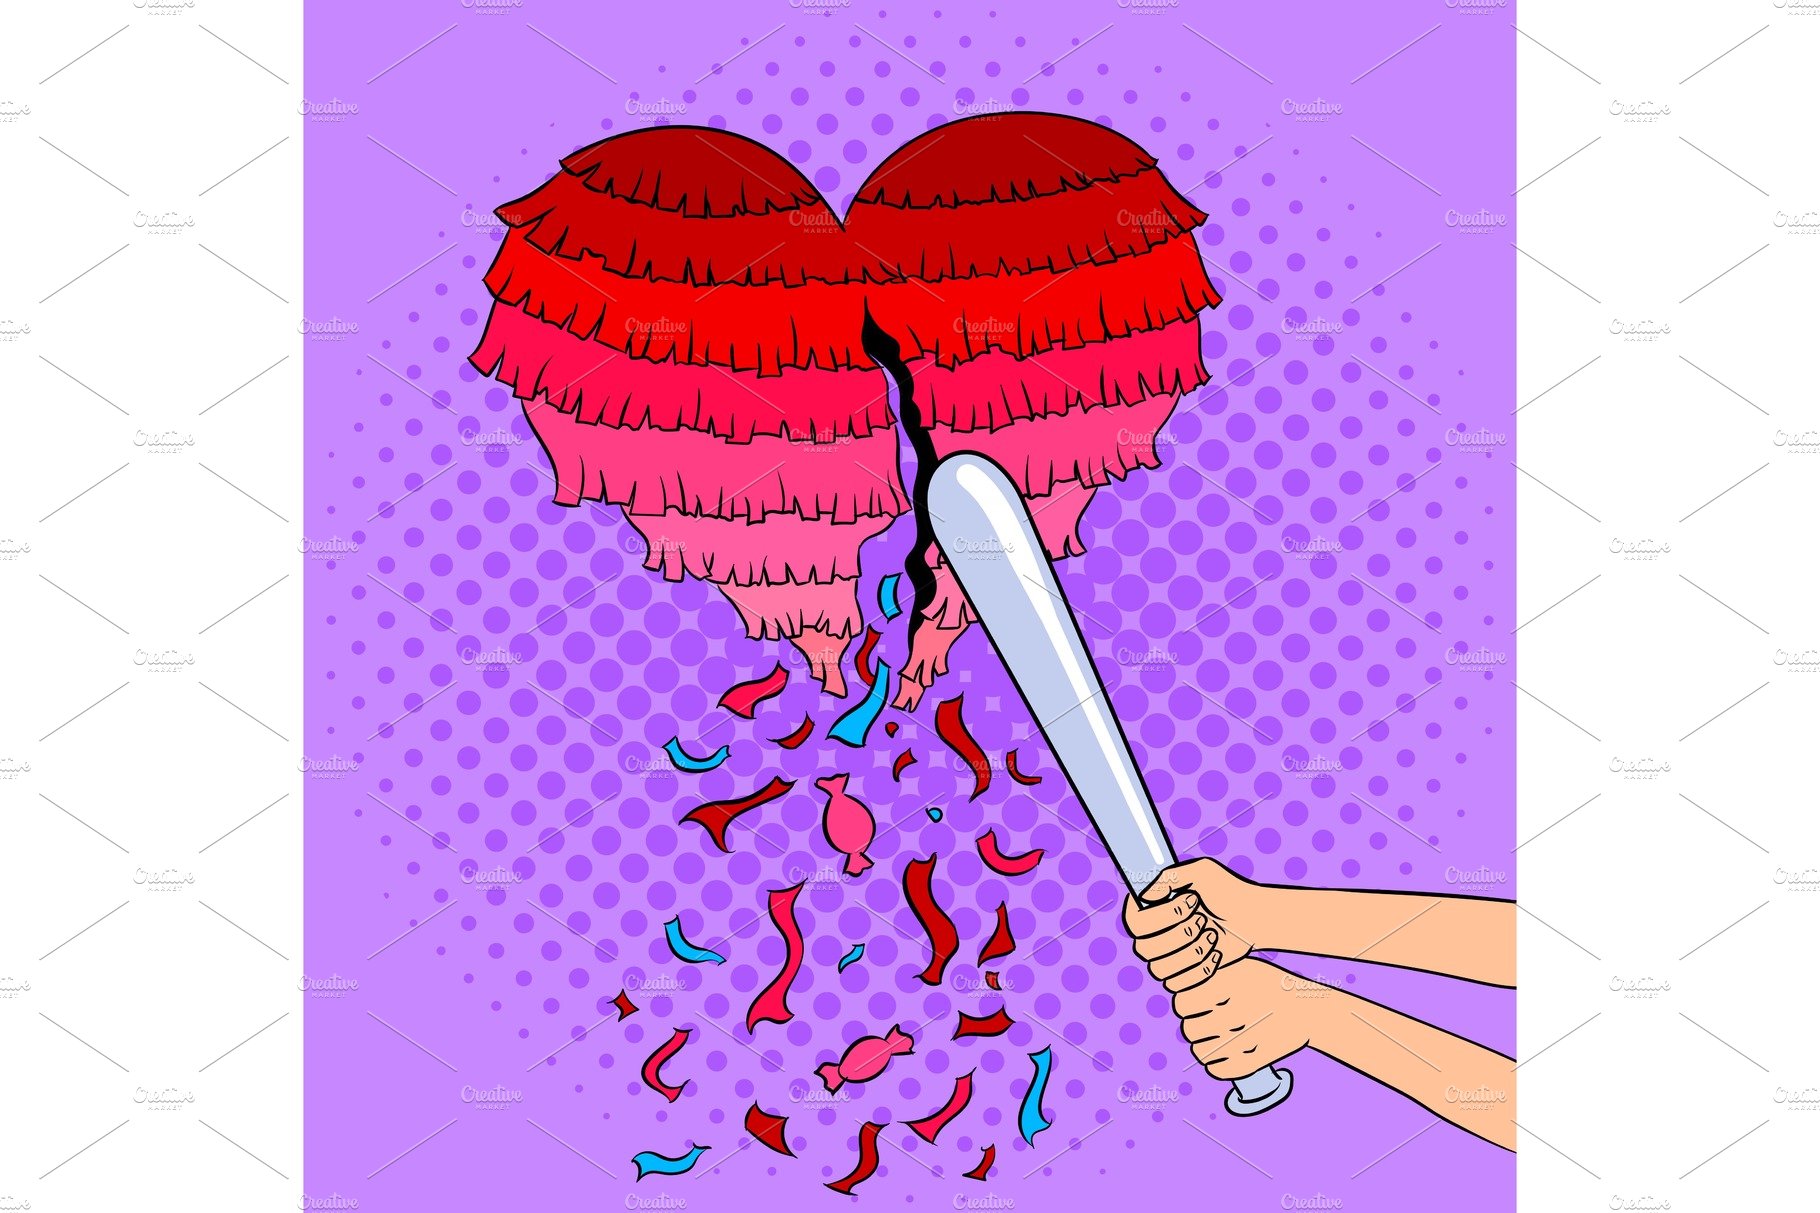 Pinata heart metaphor pop art vector illustration cover image.